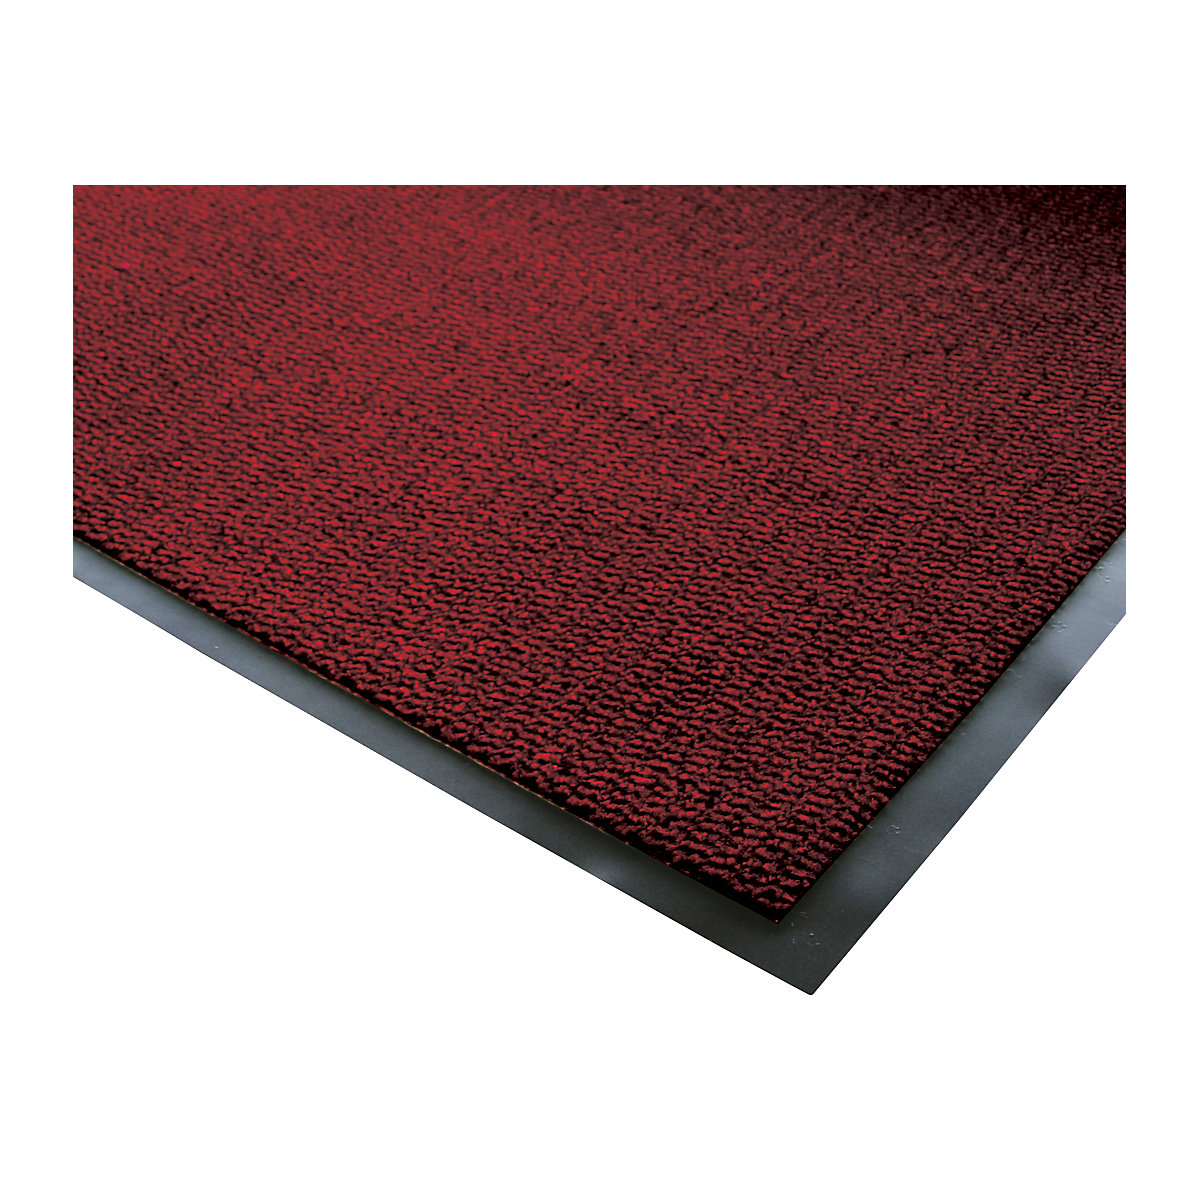 Entrance matting for indoor use, polypropylene pile, LxW 1500 x 900 mm, black / red